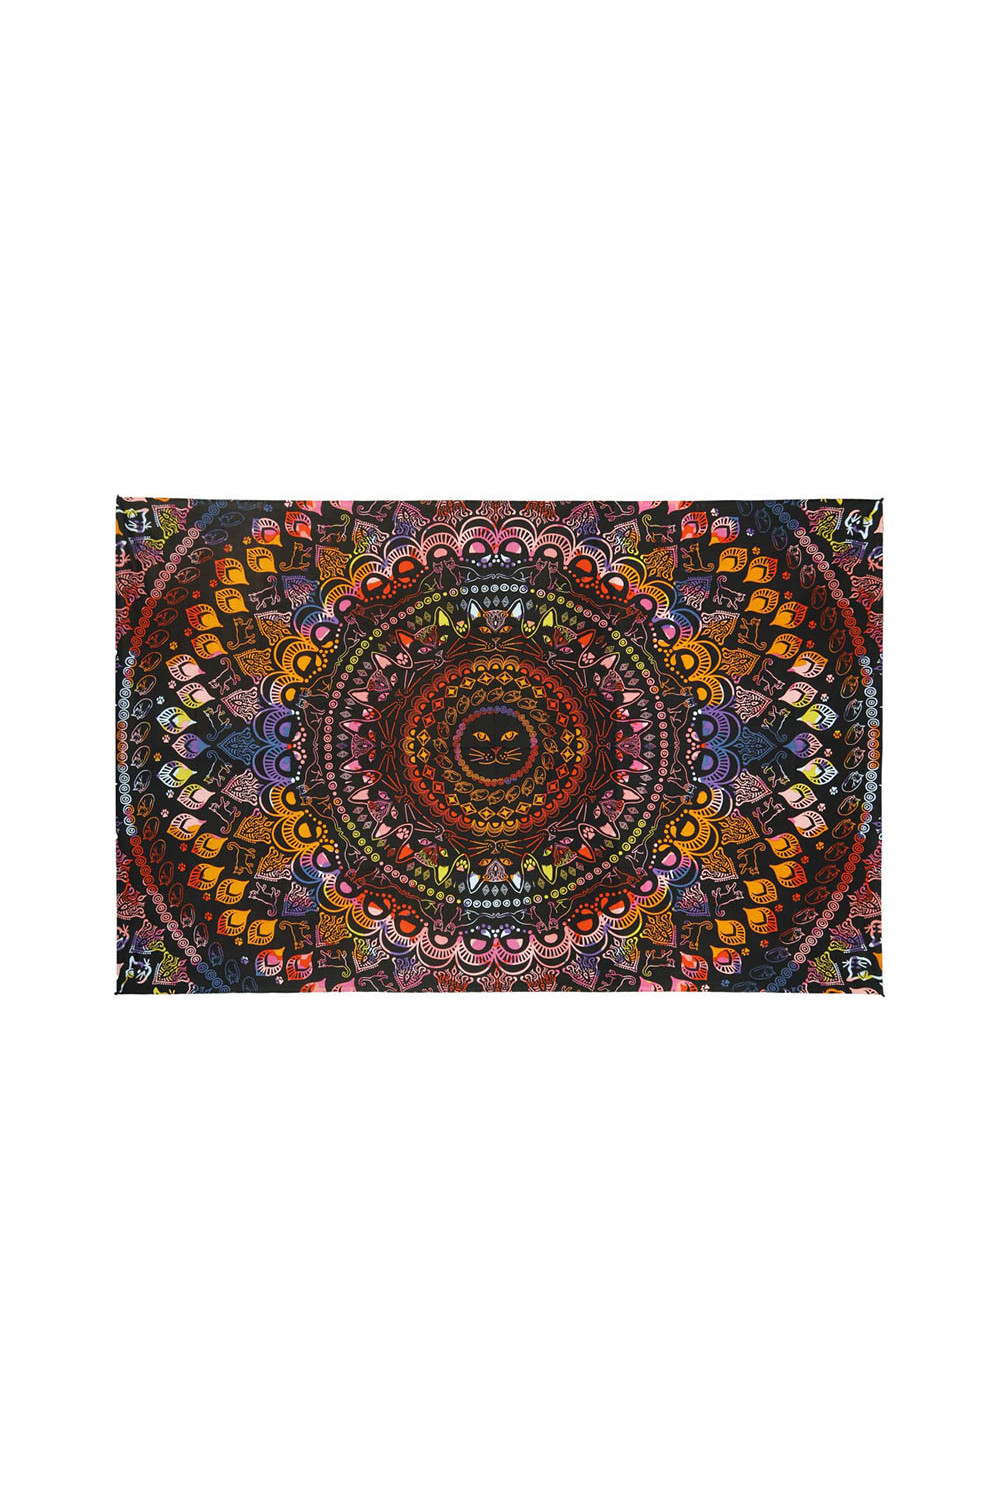 3D Colorful Cat Mandala Mini Tapestry 30x45 - Art by Dina June Toomey